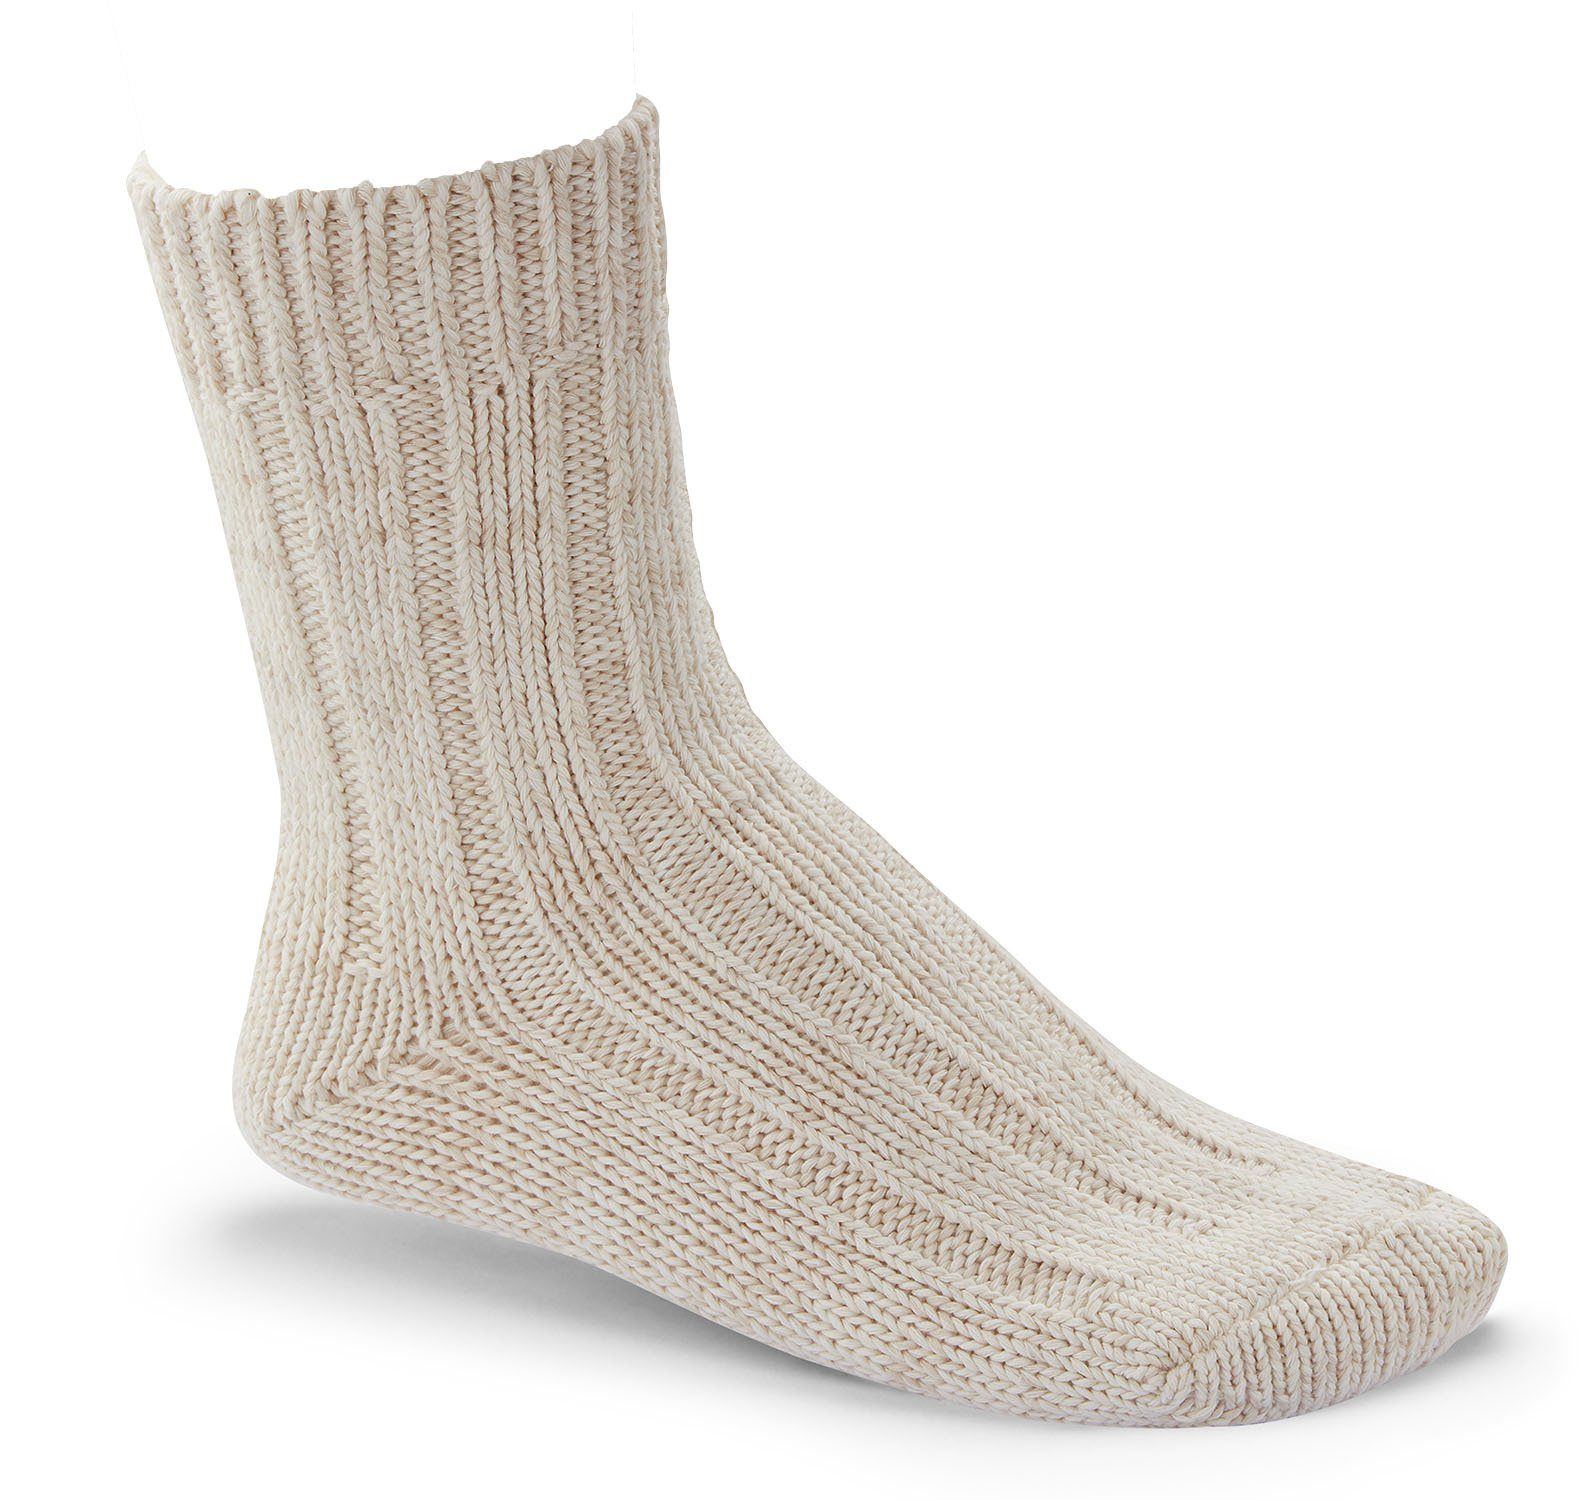 Birkenstock Kurzsocken Twist Damen Socken Cotton - Weiß Strumpf